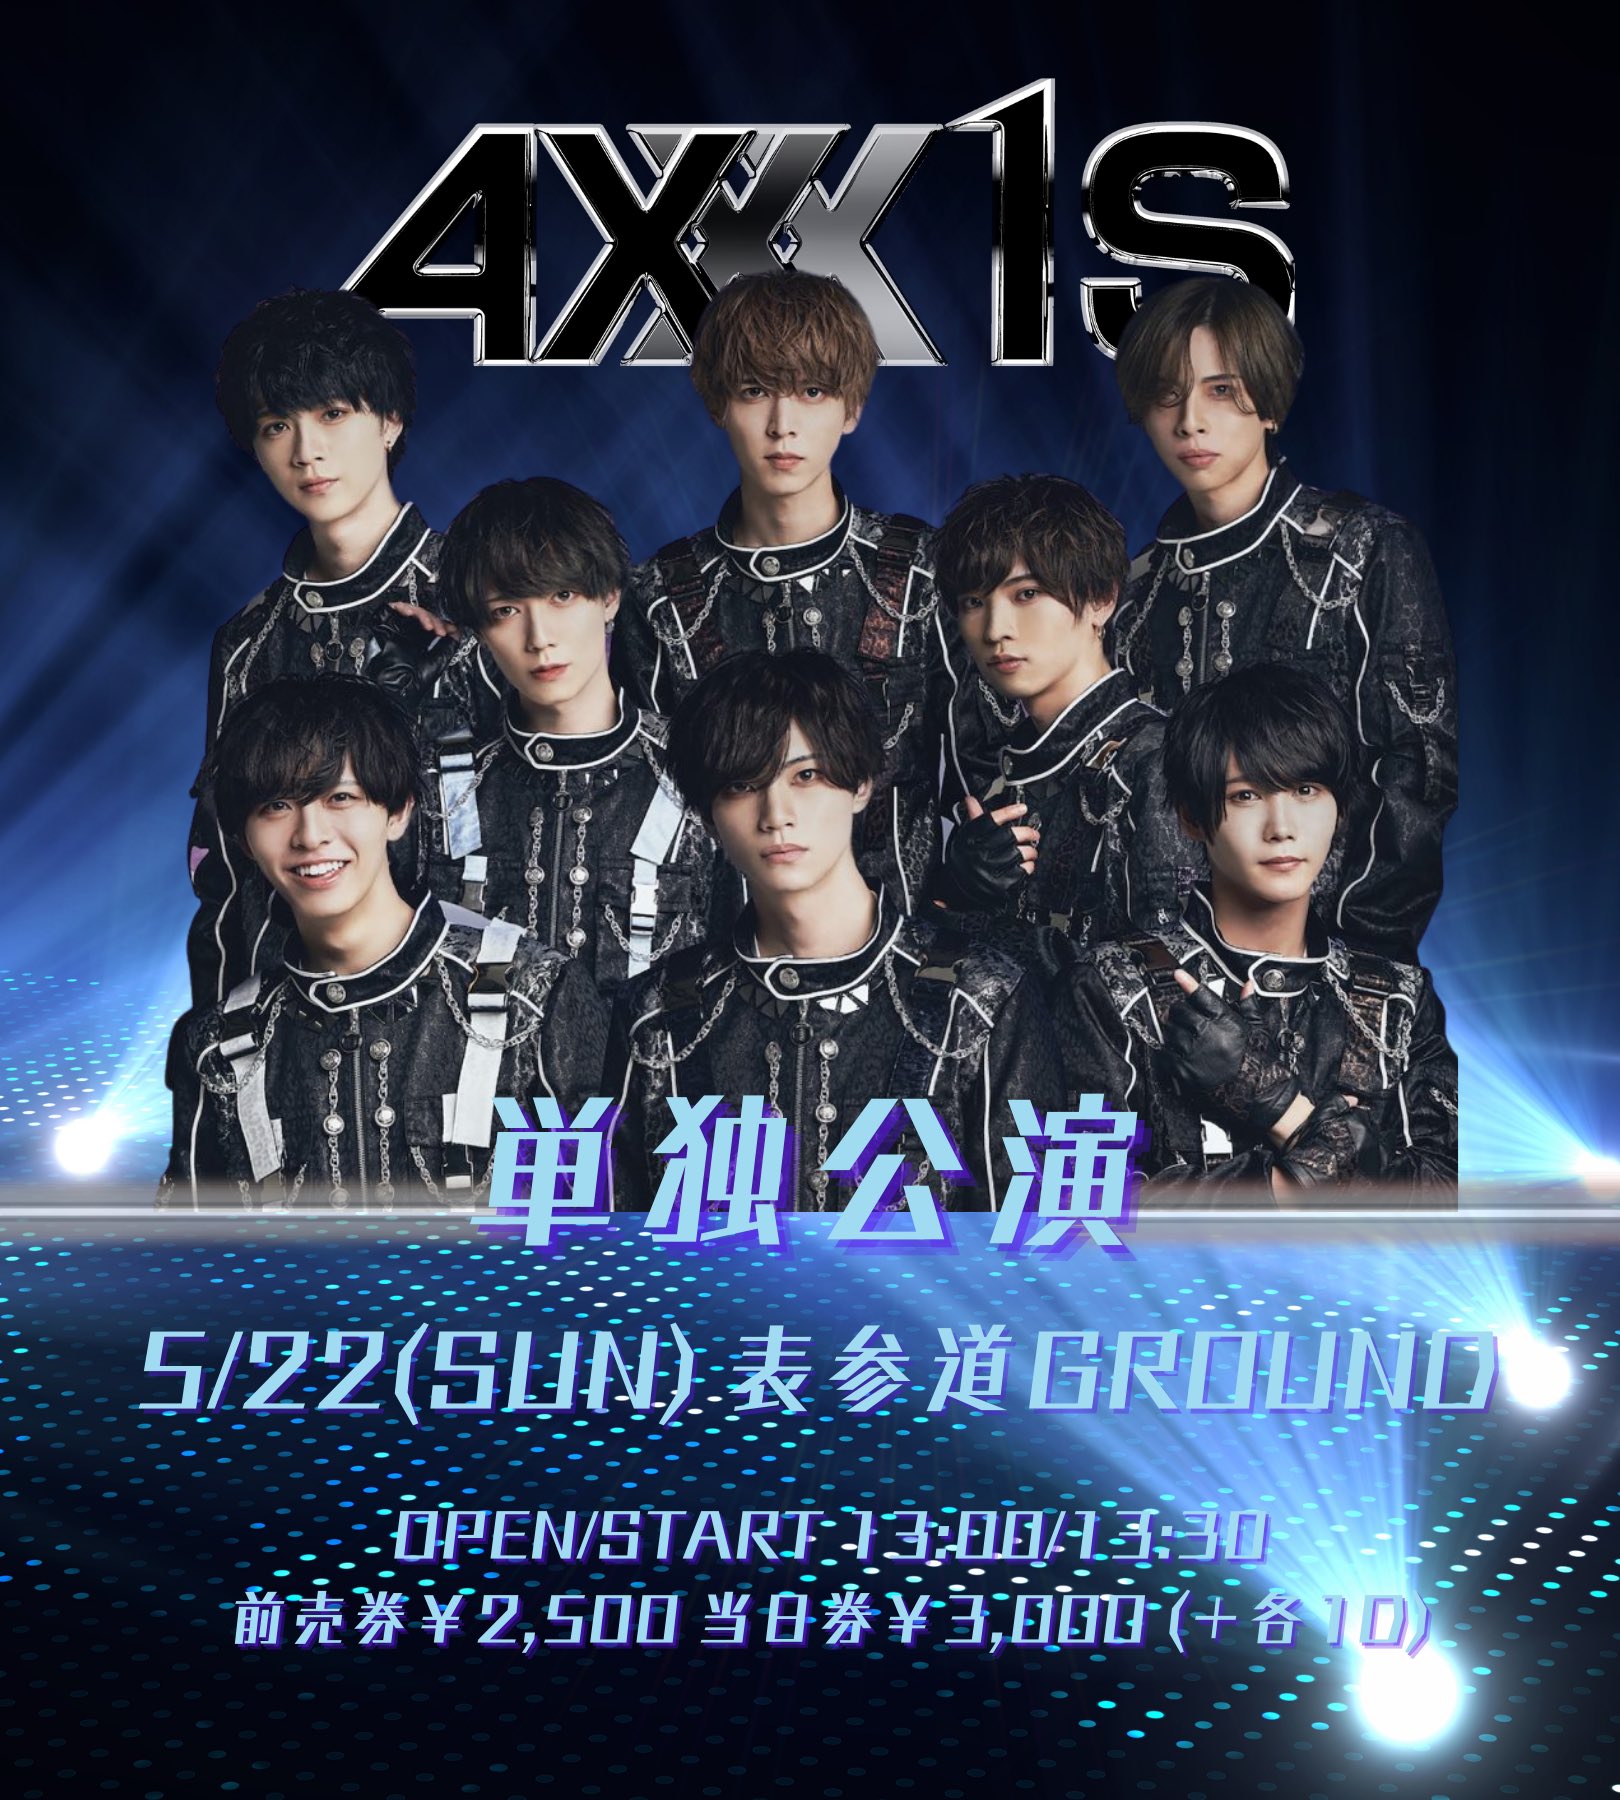 AXXX1S 5/22 単独公演＠表参道GROUND